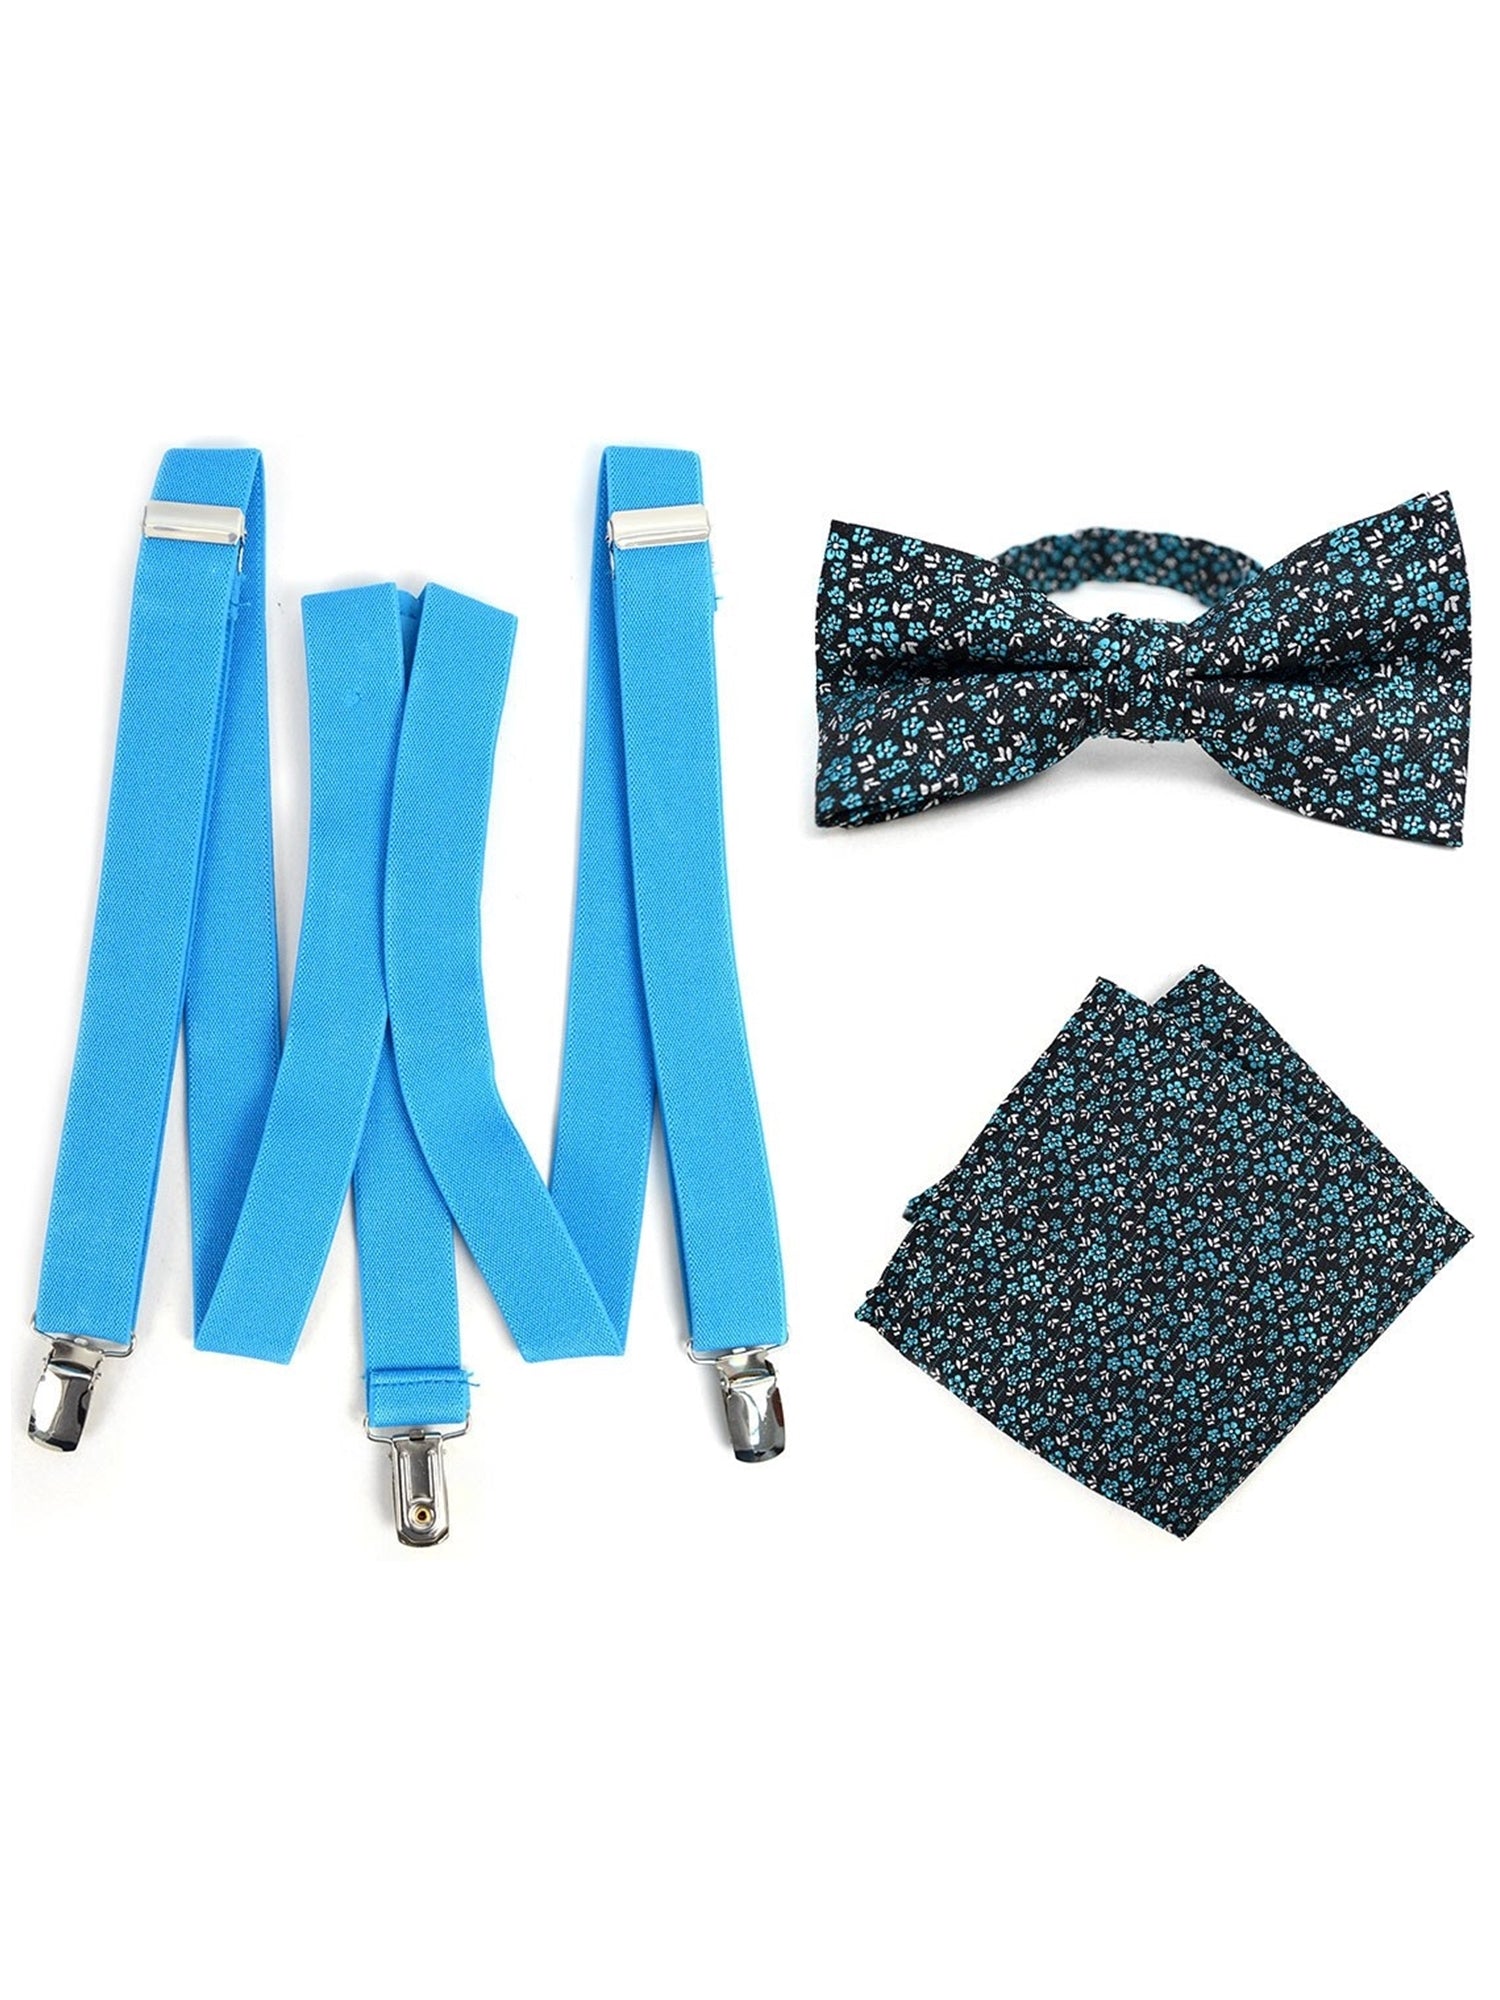 Men's Navy Blue 3 PC Clip-on Suspenders, Bow Tie & Hanky Sets Men's Solid Color Bow Tie TheDapperTie Turquoise # 3 Regular 